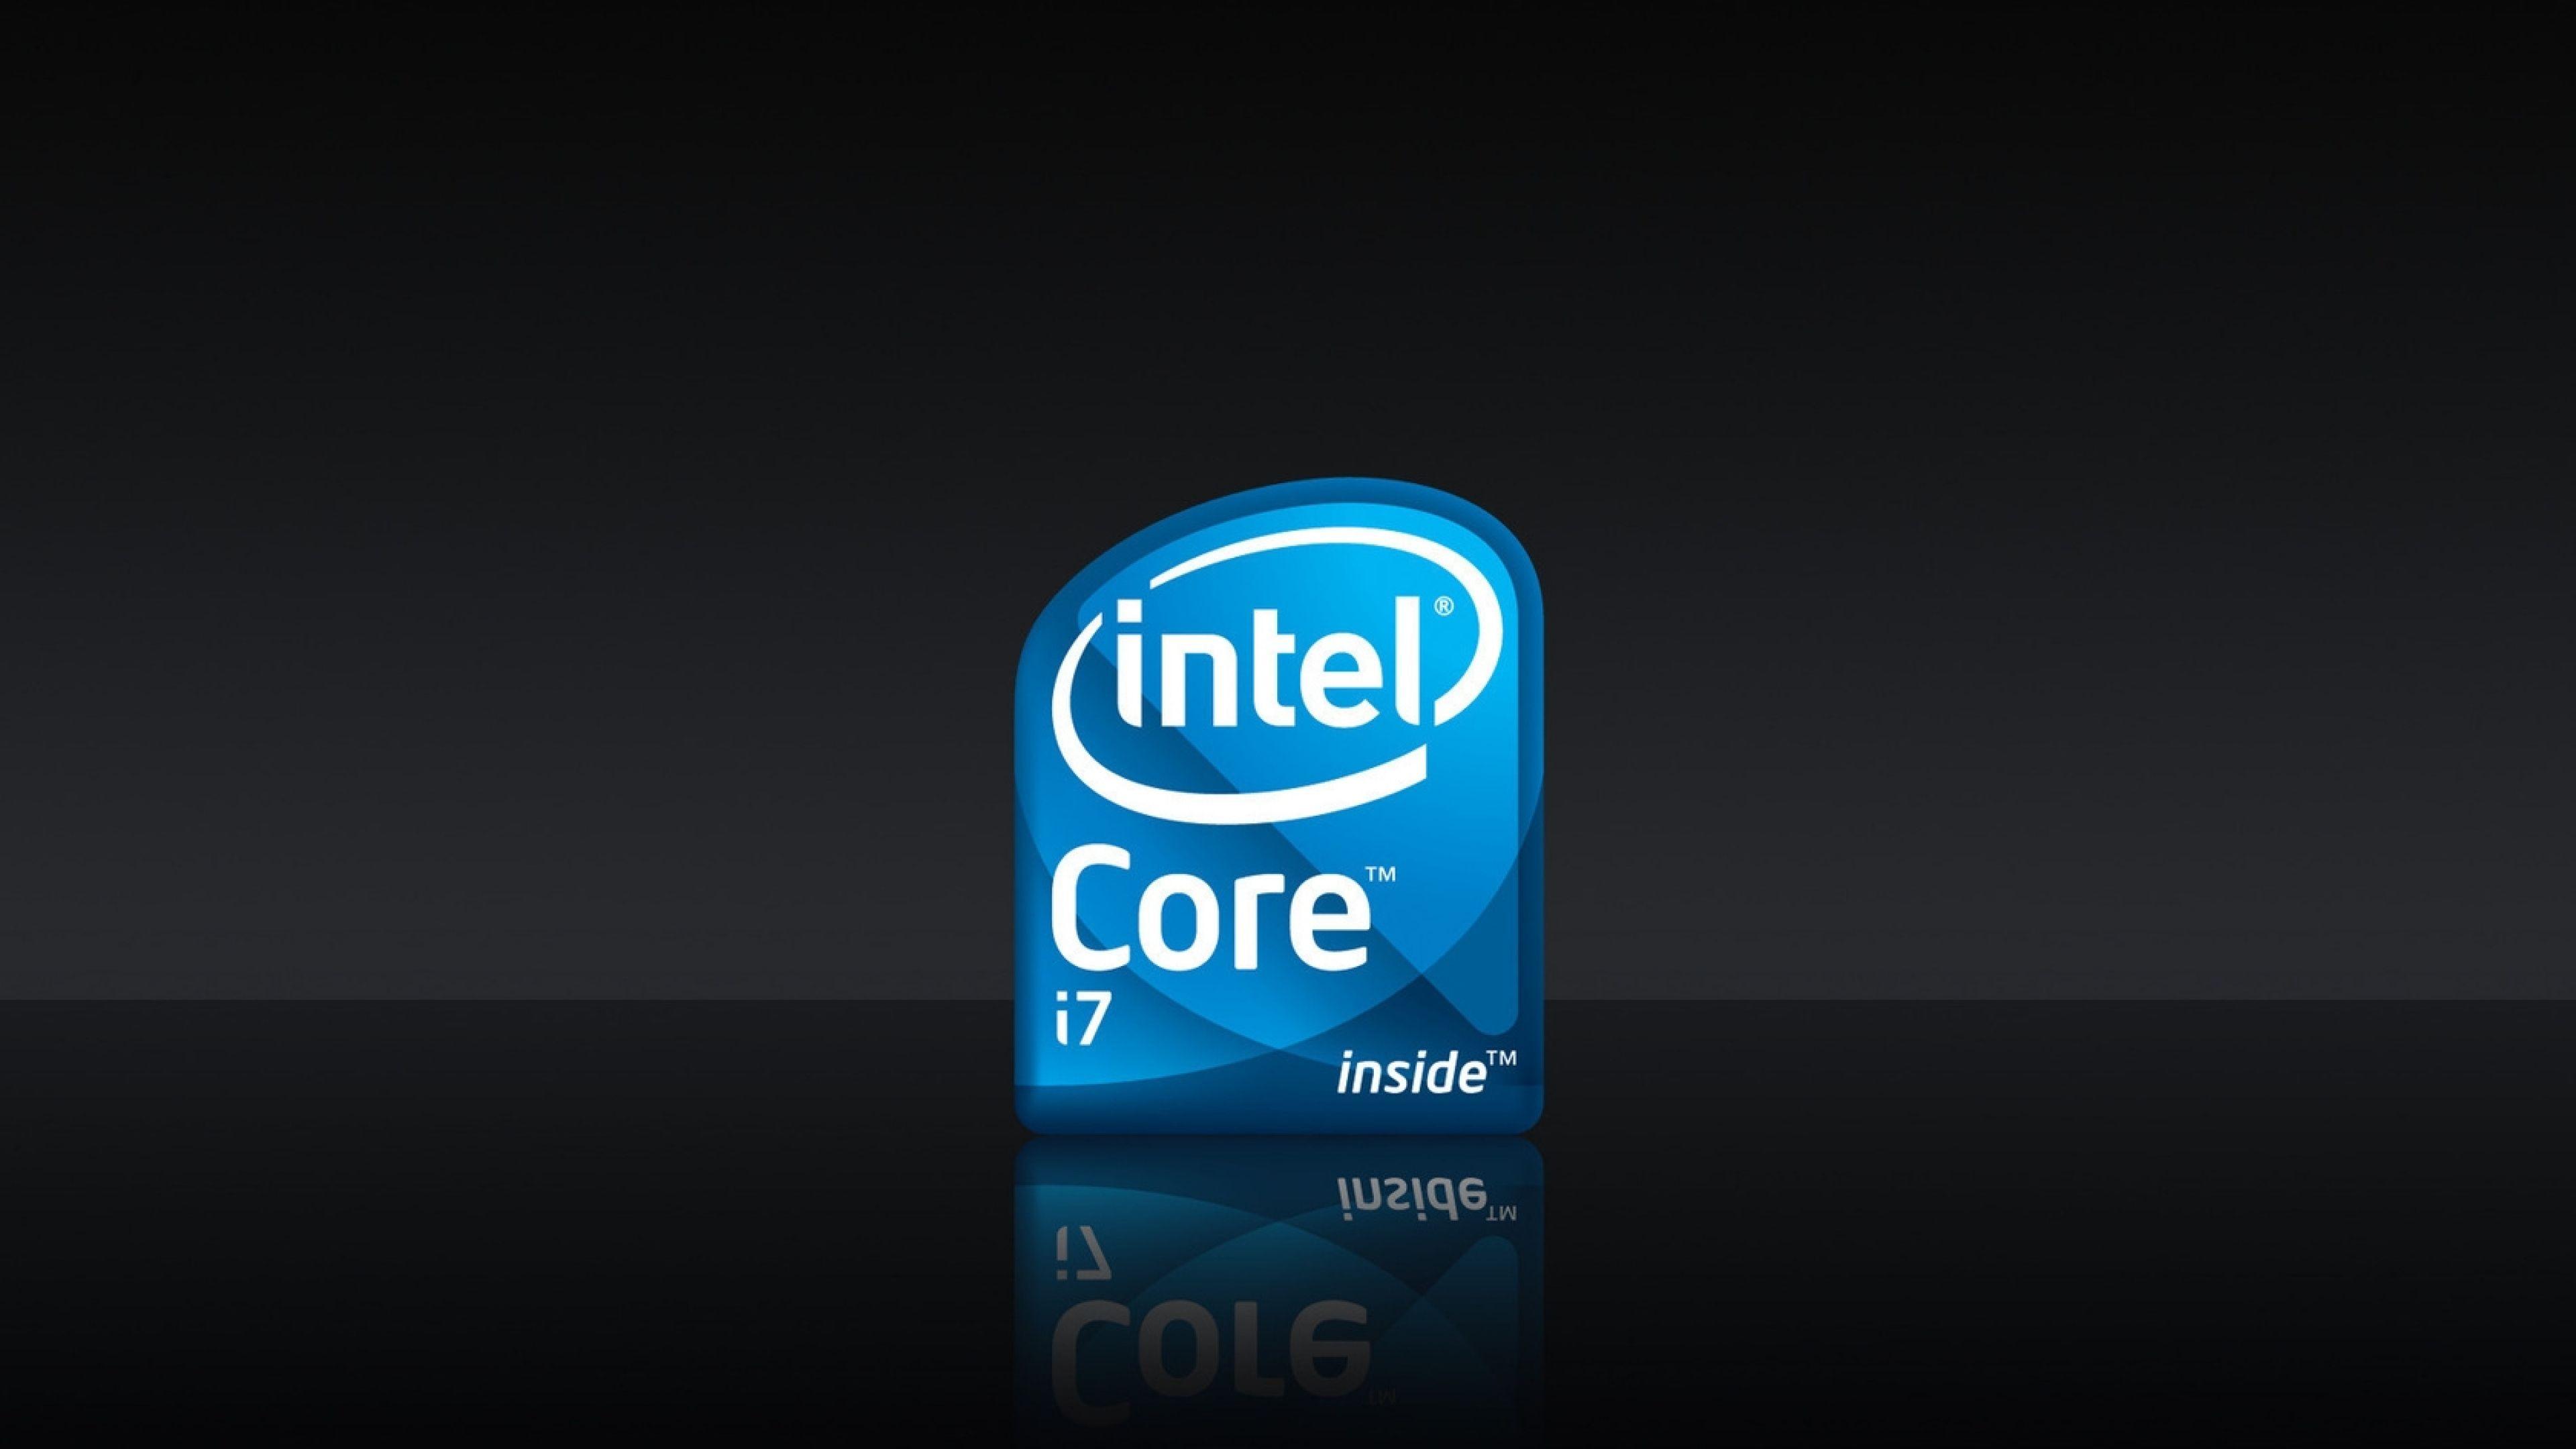 Intel Screensaver Free